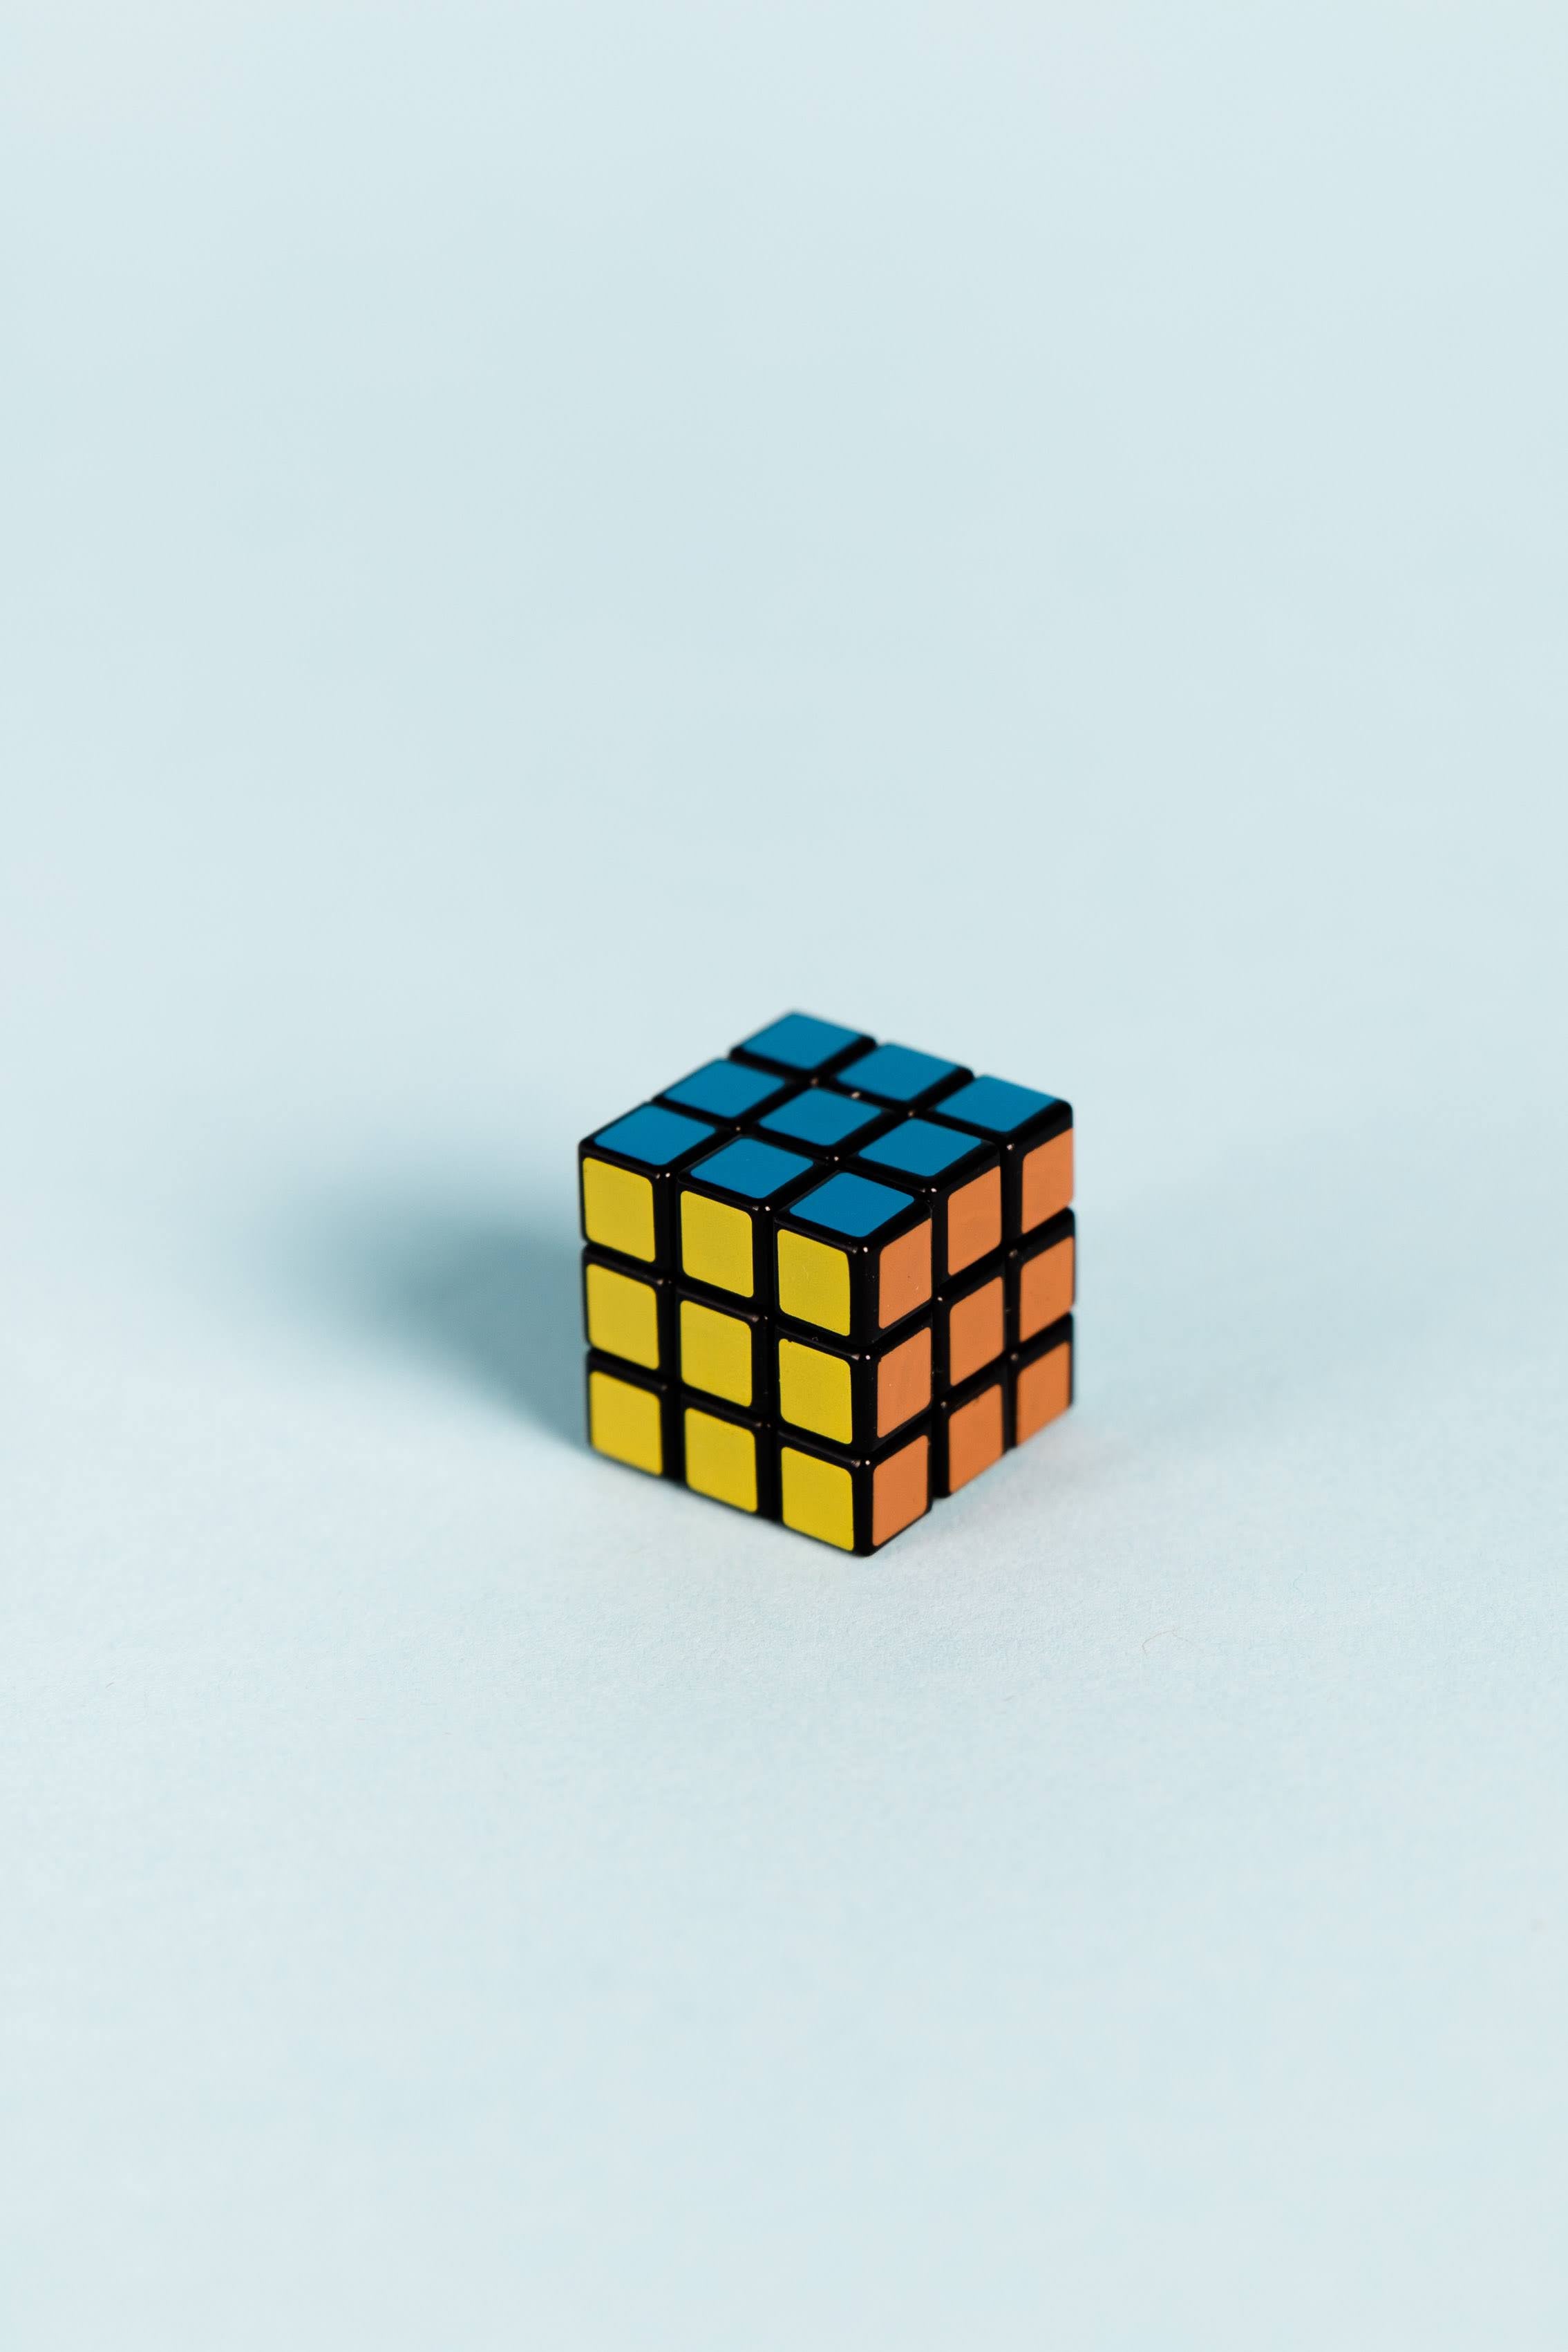 World's Smallest: Rubik's Cube 3x3